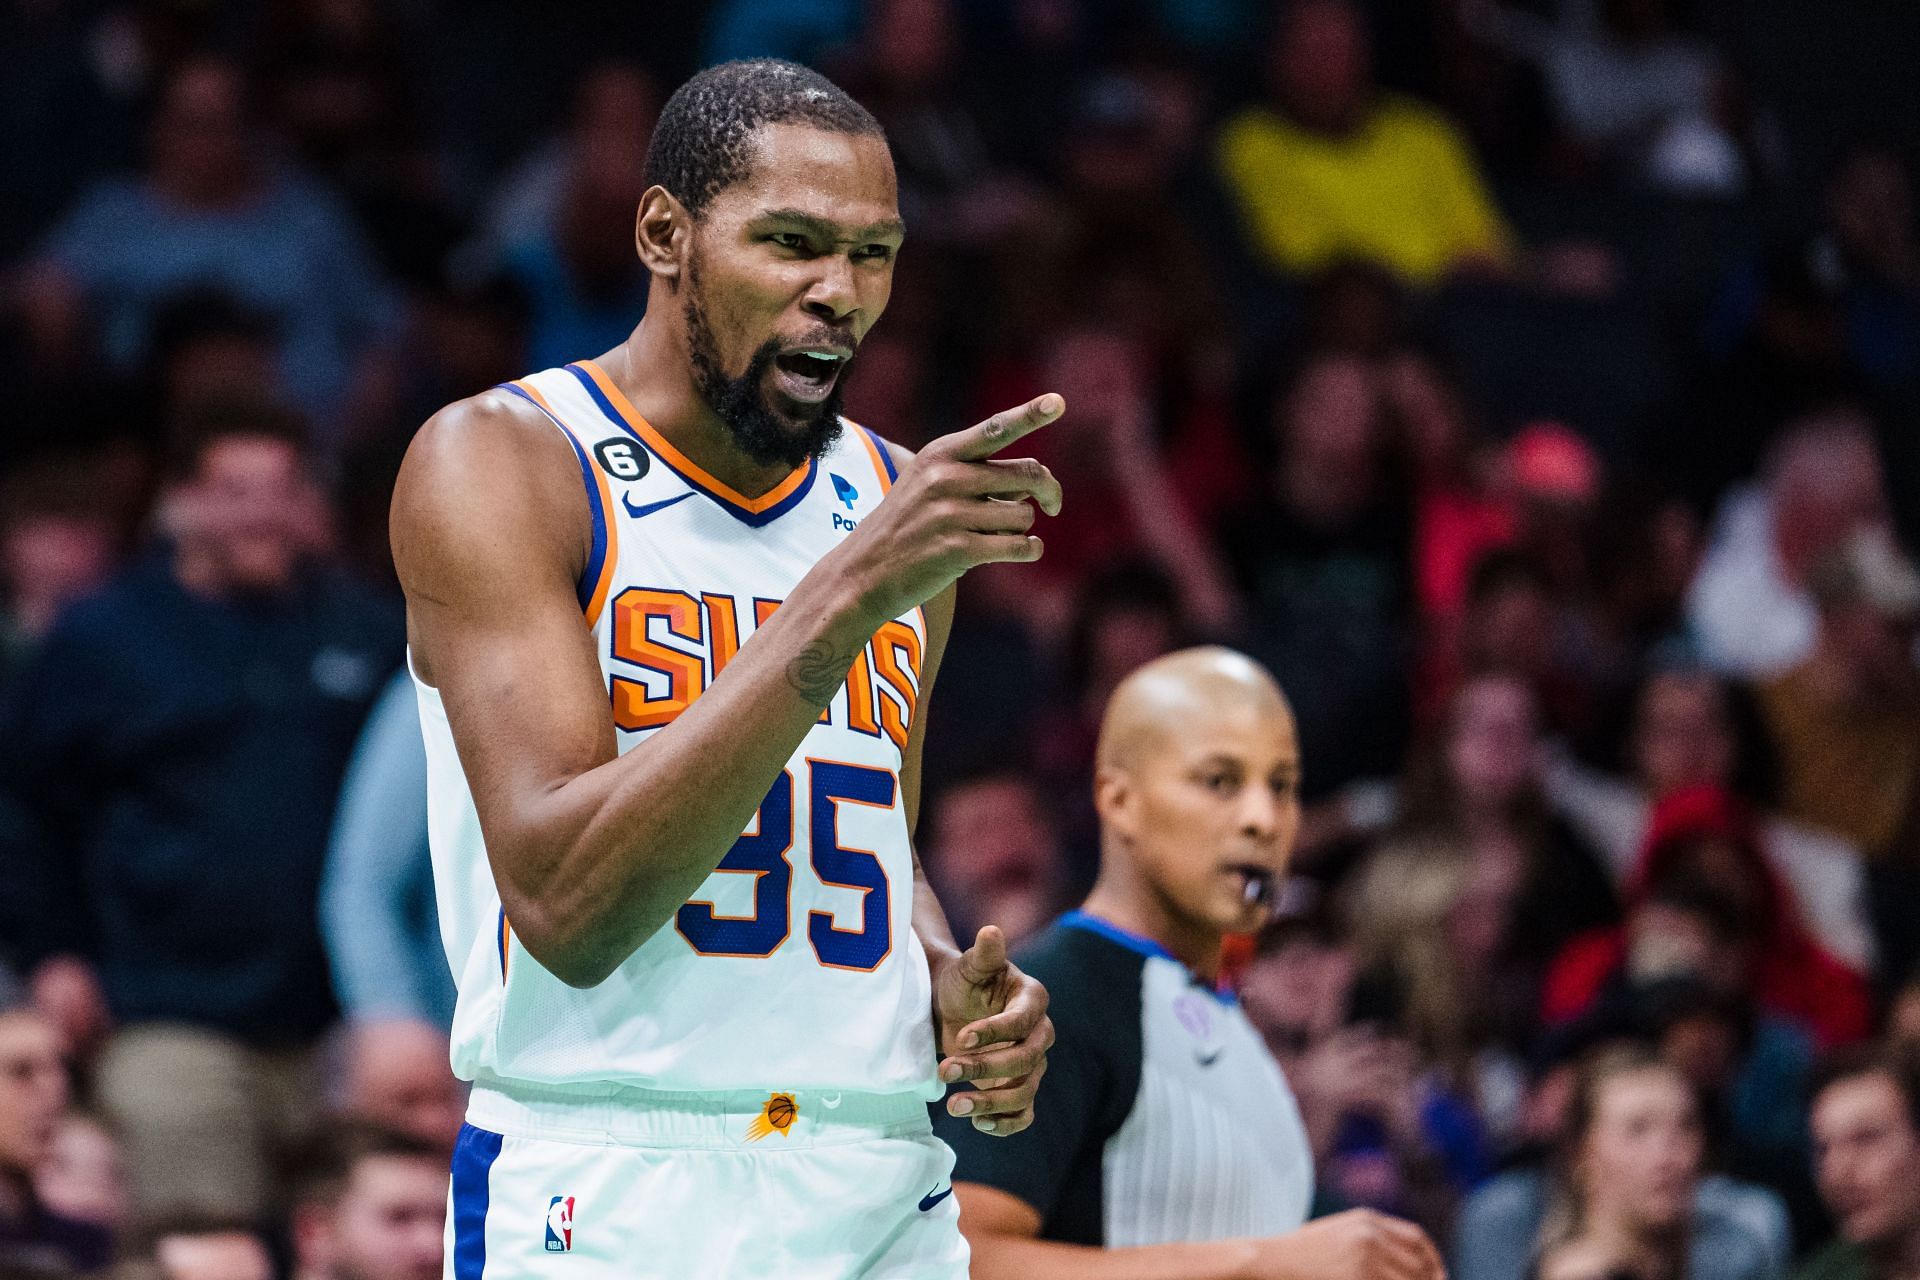 Phoenix Suns superstar forward Kevin Durant